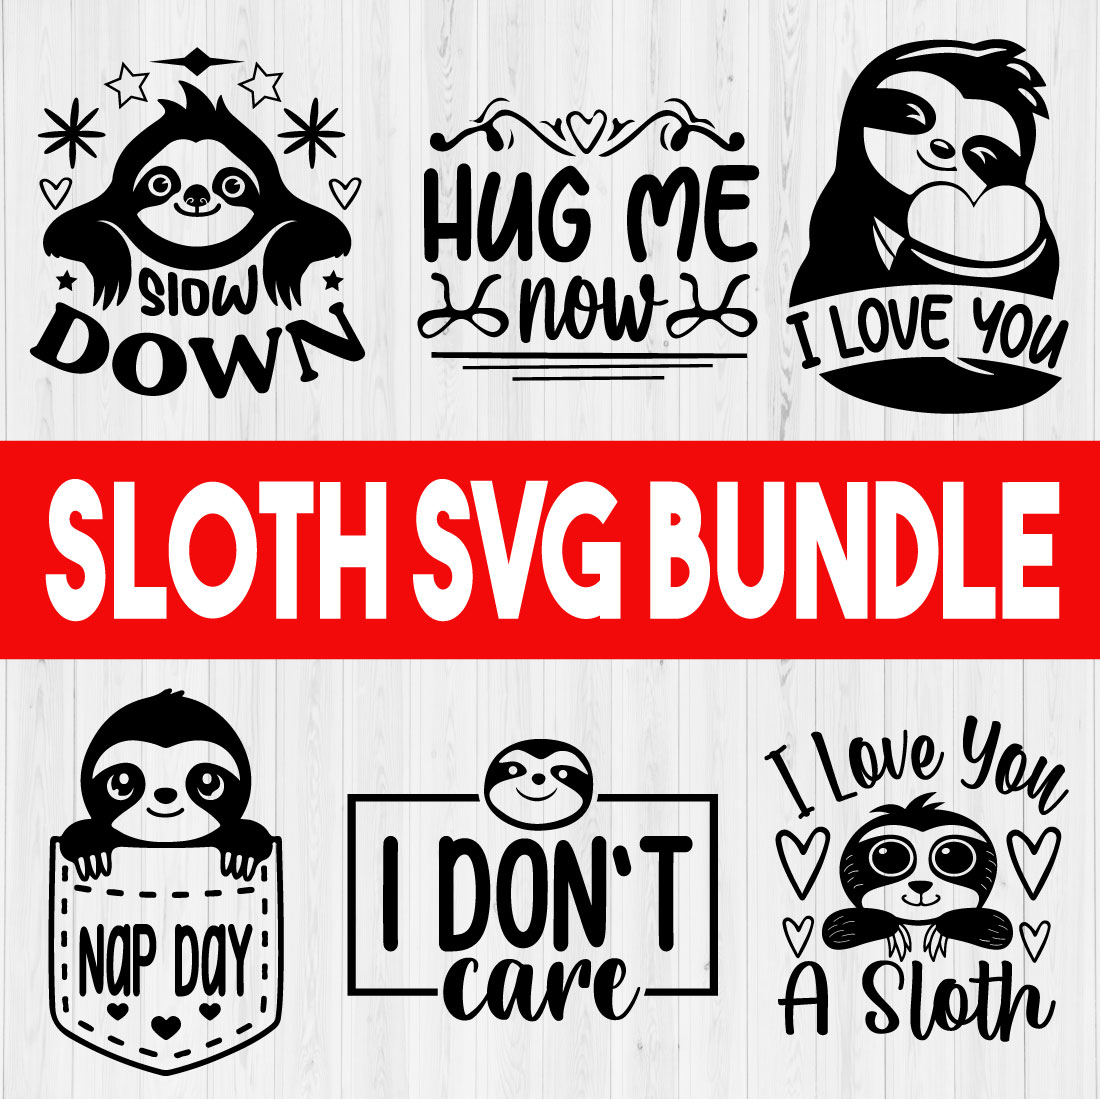 Sloth Svg Quote Bundle Vol3 preview image.